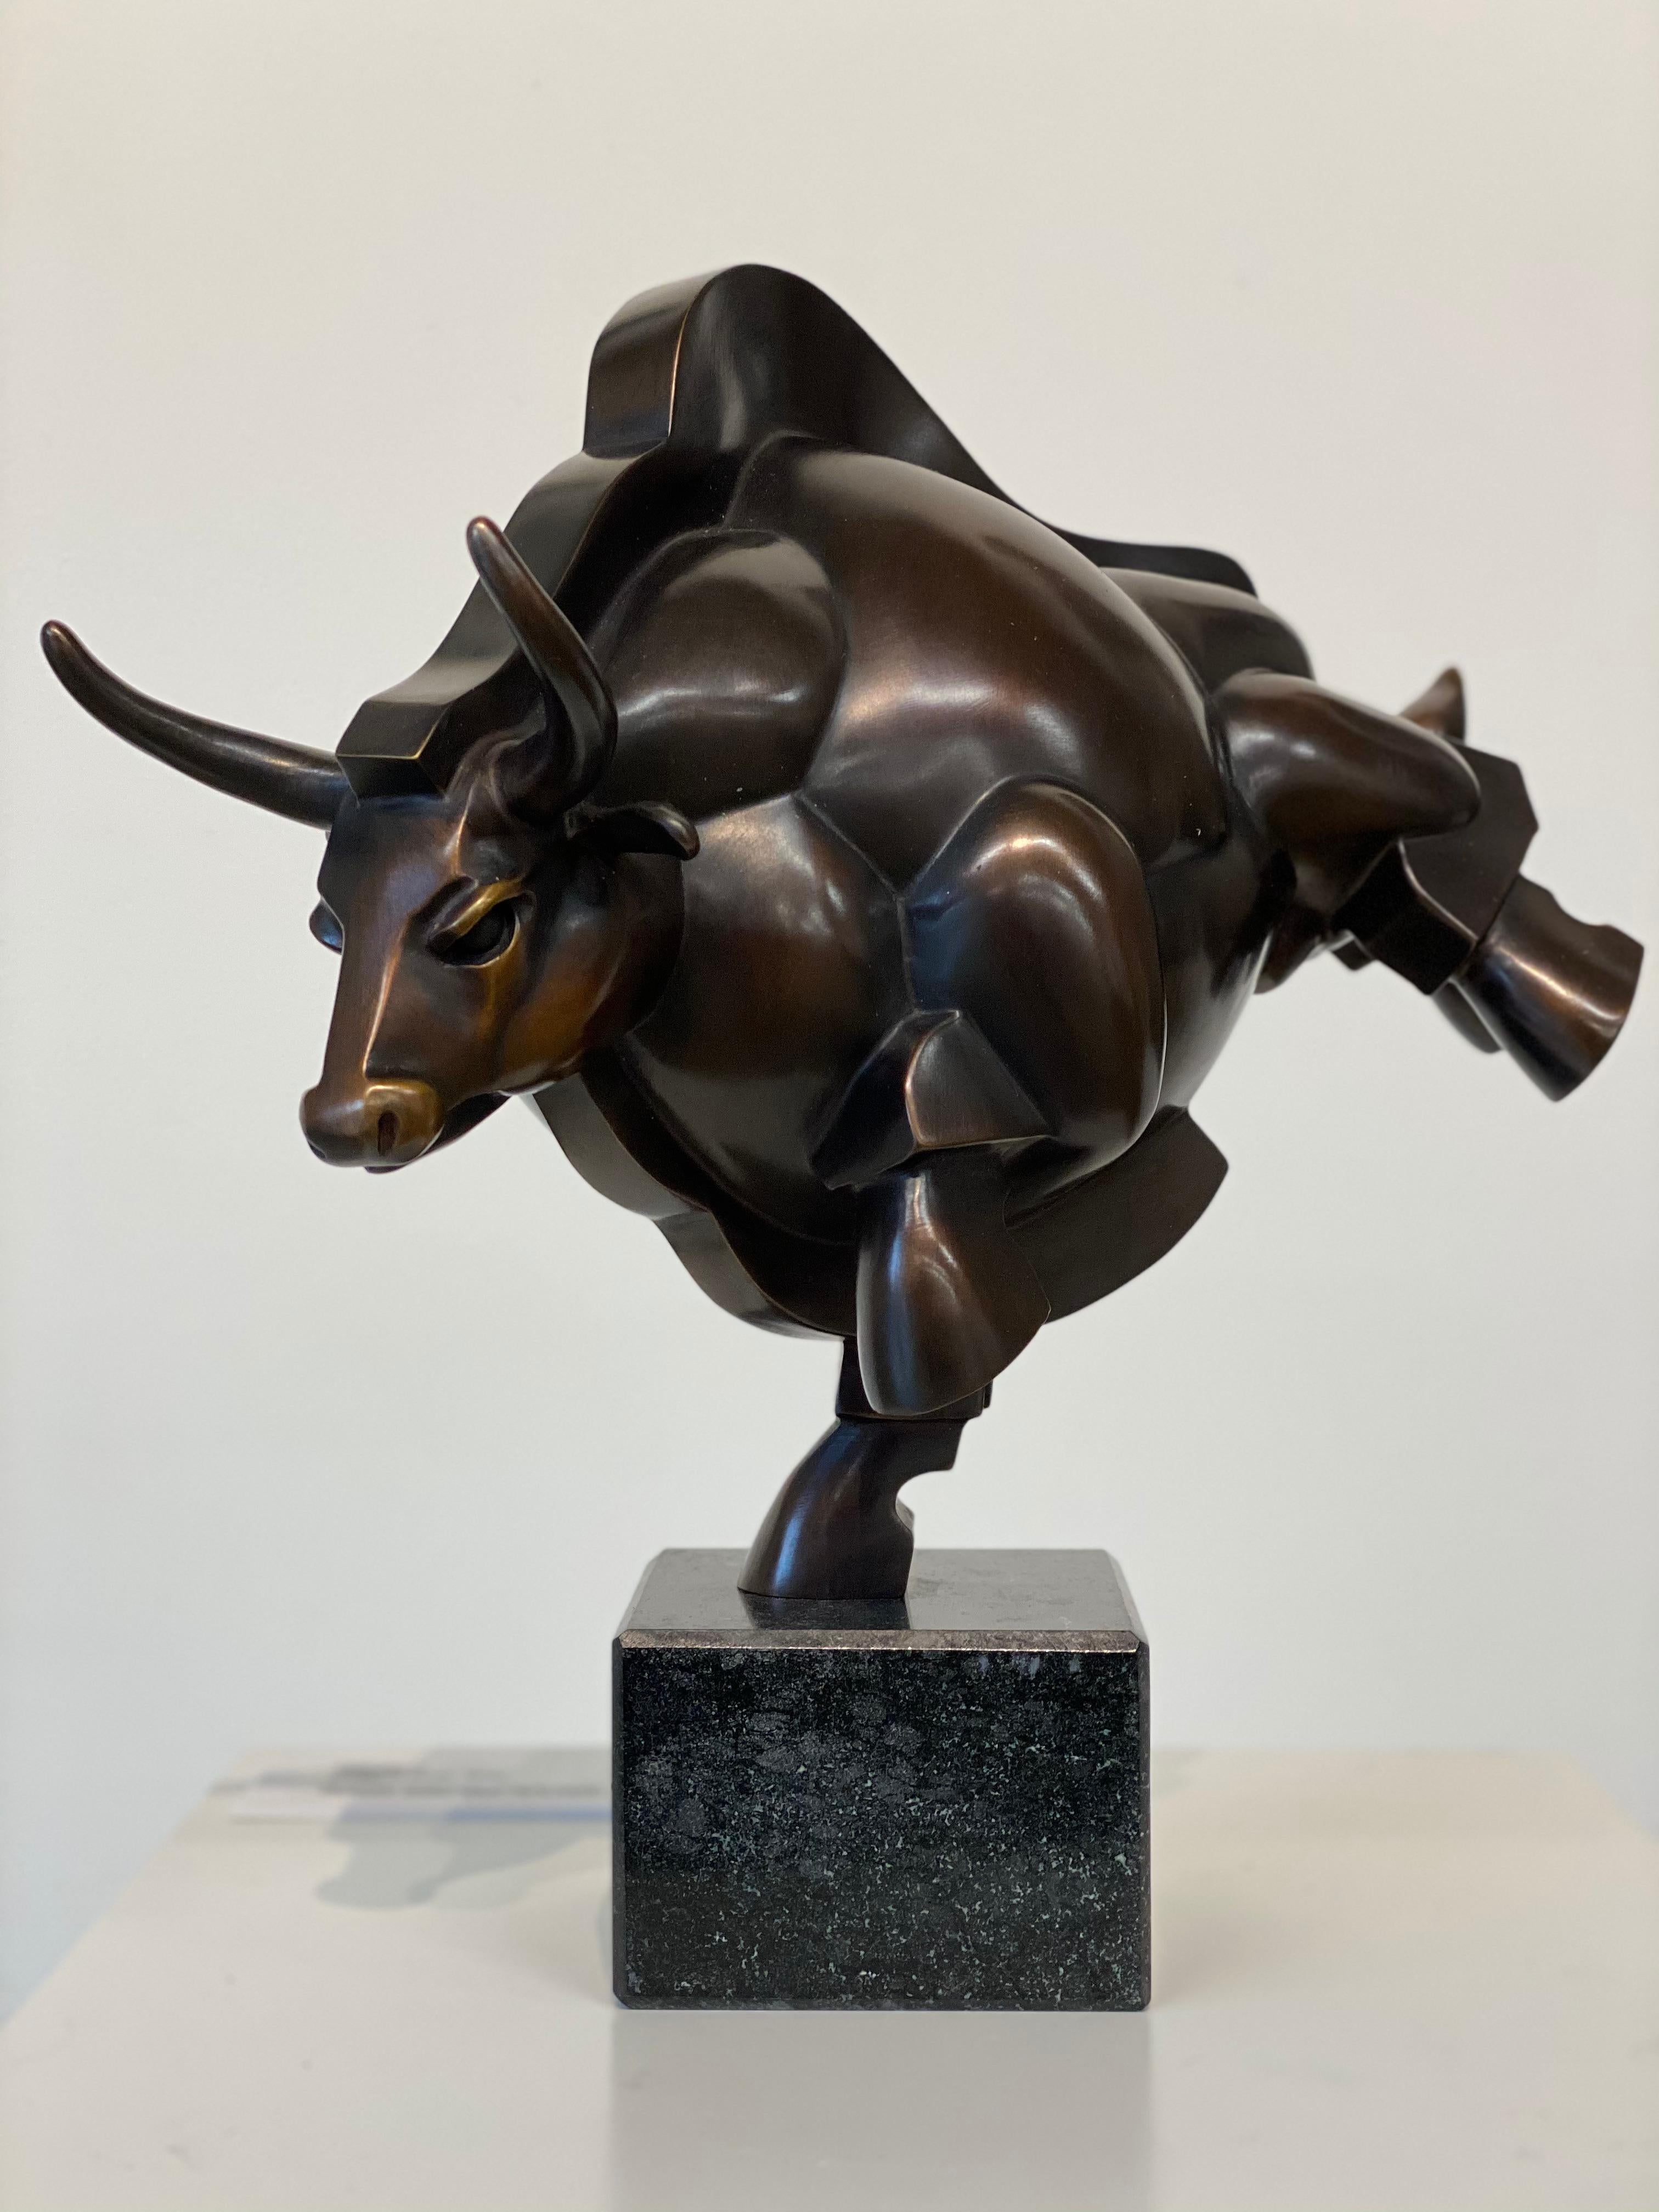 Frans van Straaten Figurative Sculpture - Bull Power- 21st Century Contemporary Bronze Sculpture of a Bull Running